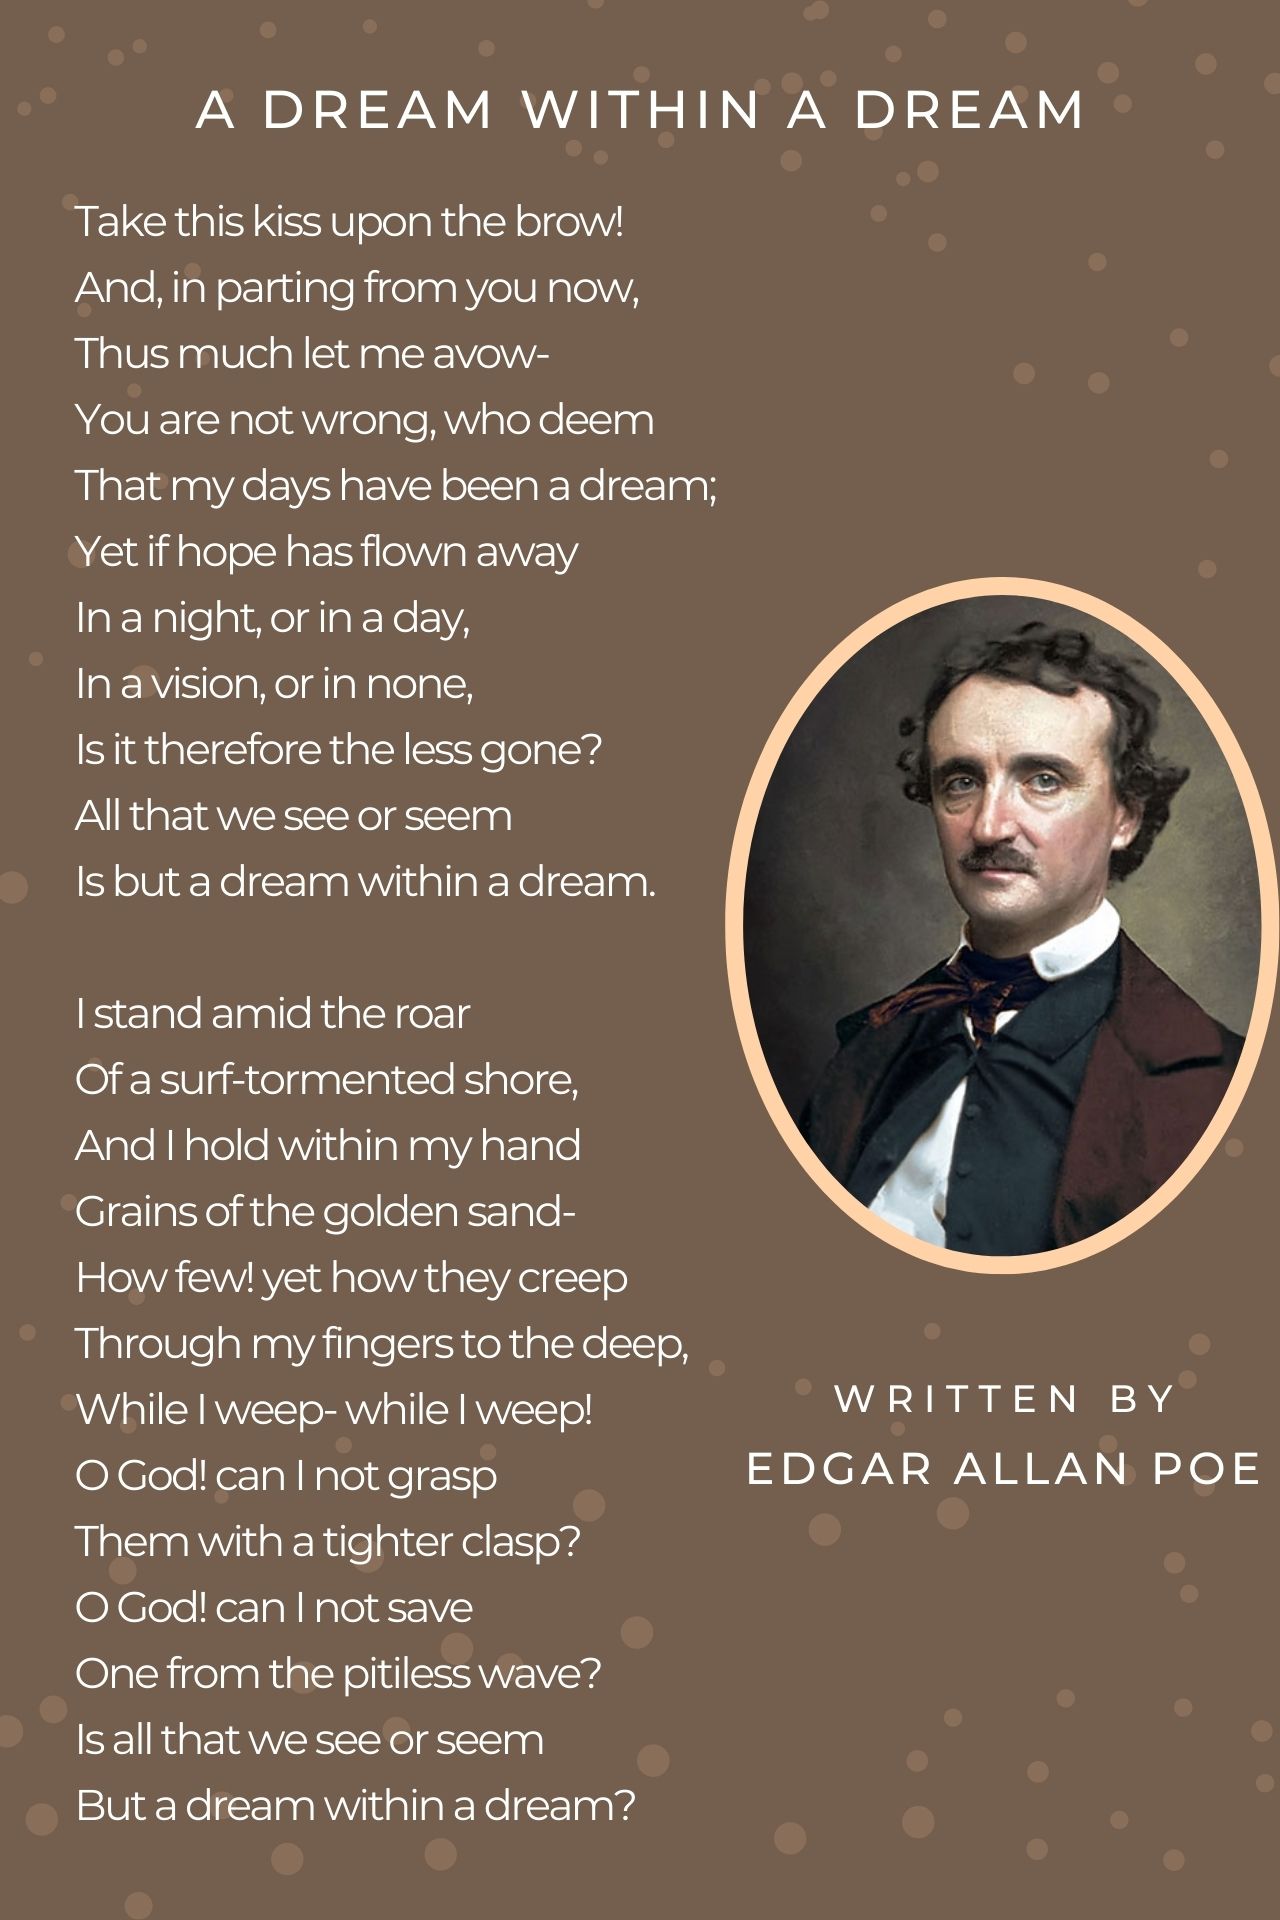 A Dream Within A Dream - A Dream Within A Dream Poem by Edgar Allan Poe